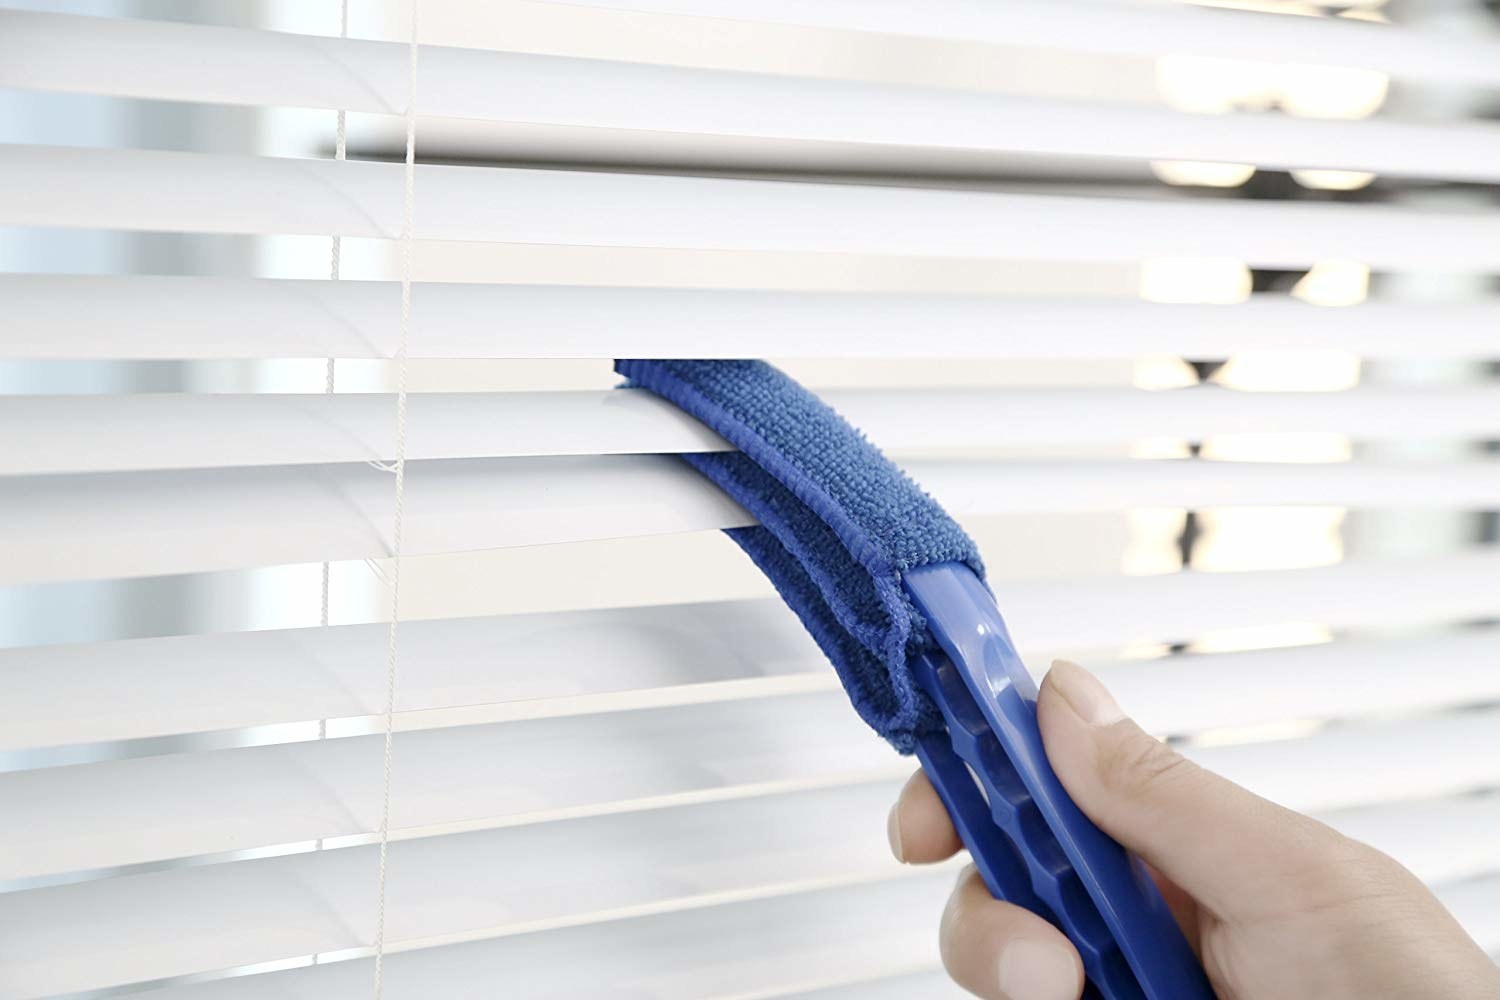 Model using microfiber duster to clean in between blinds